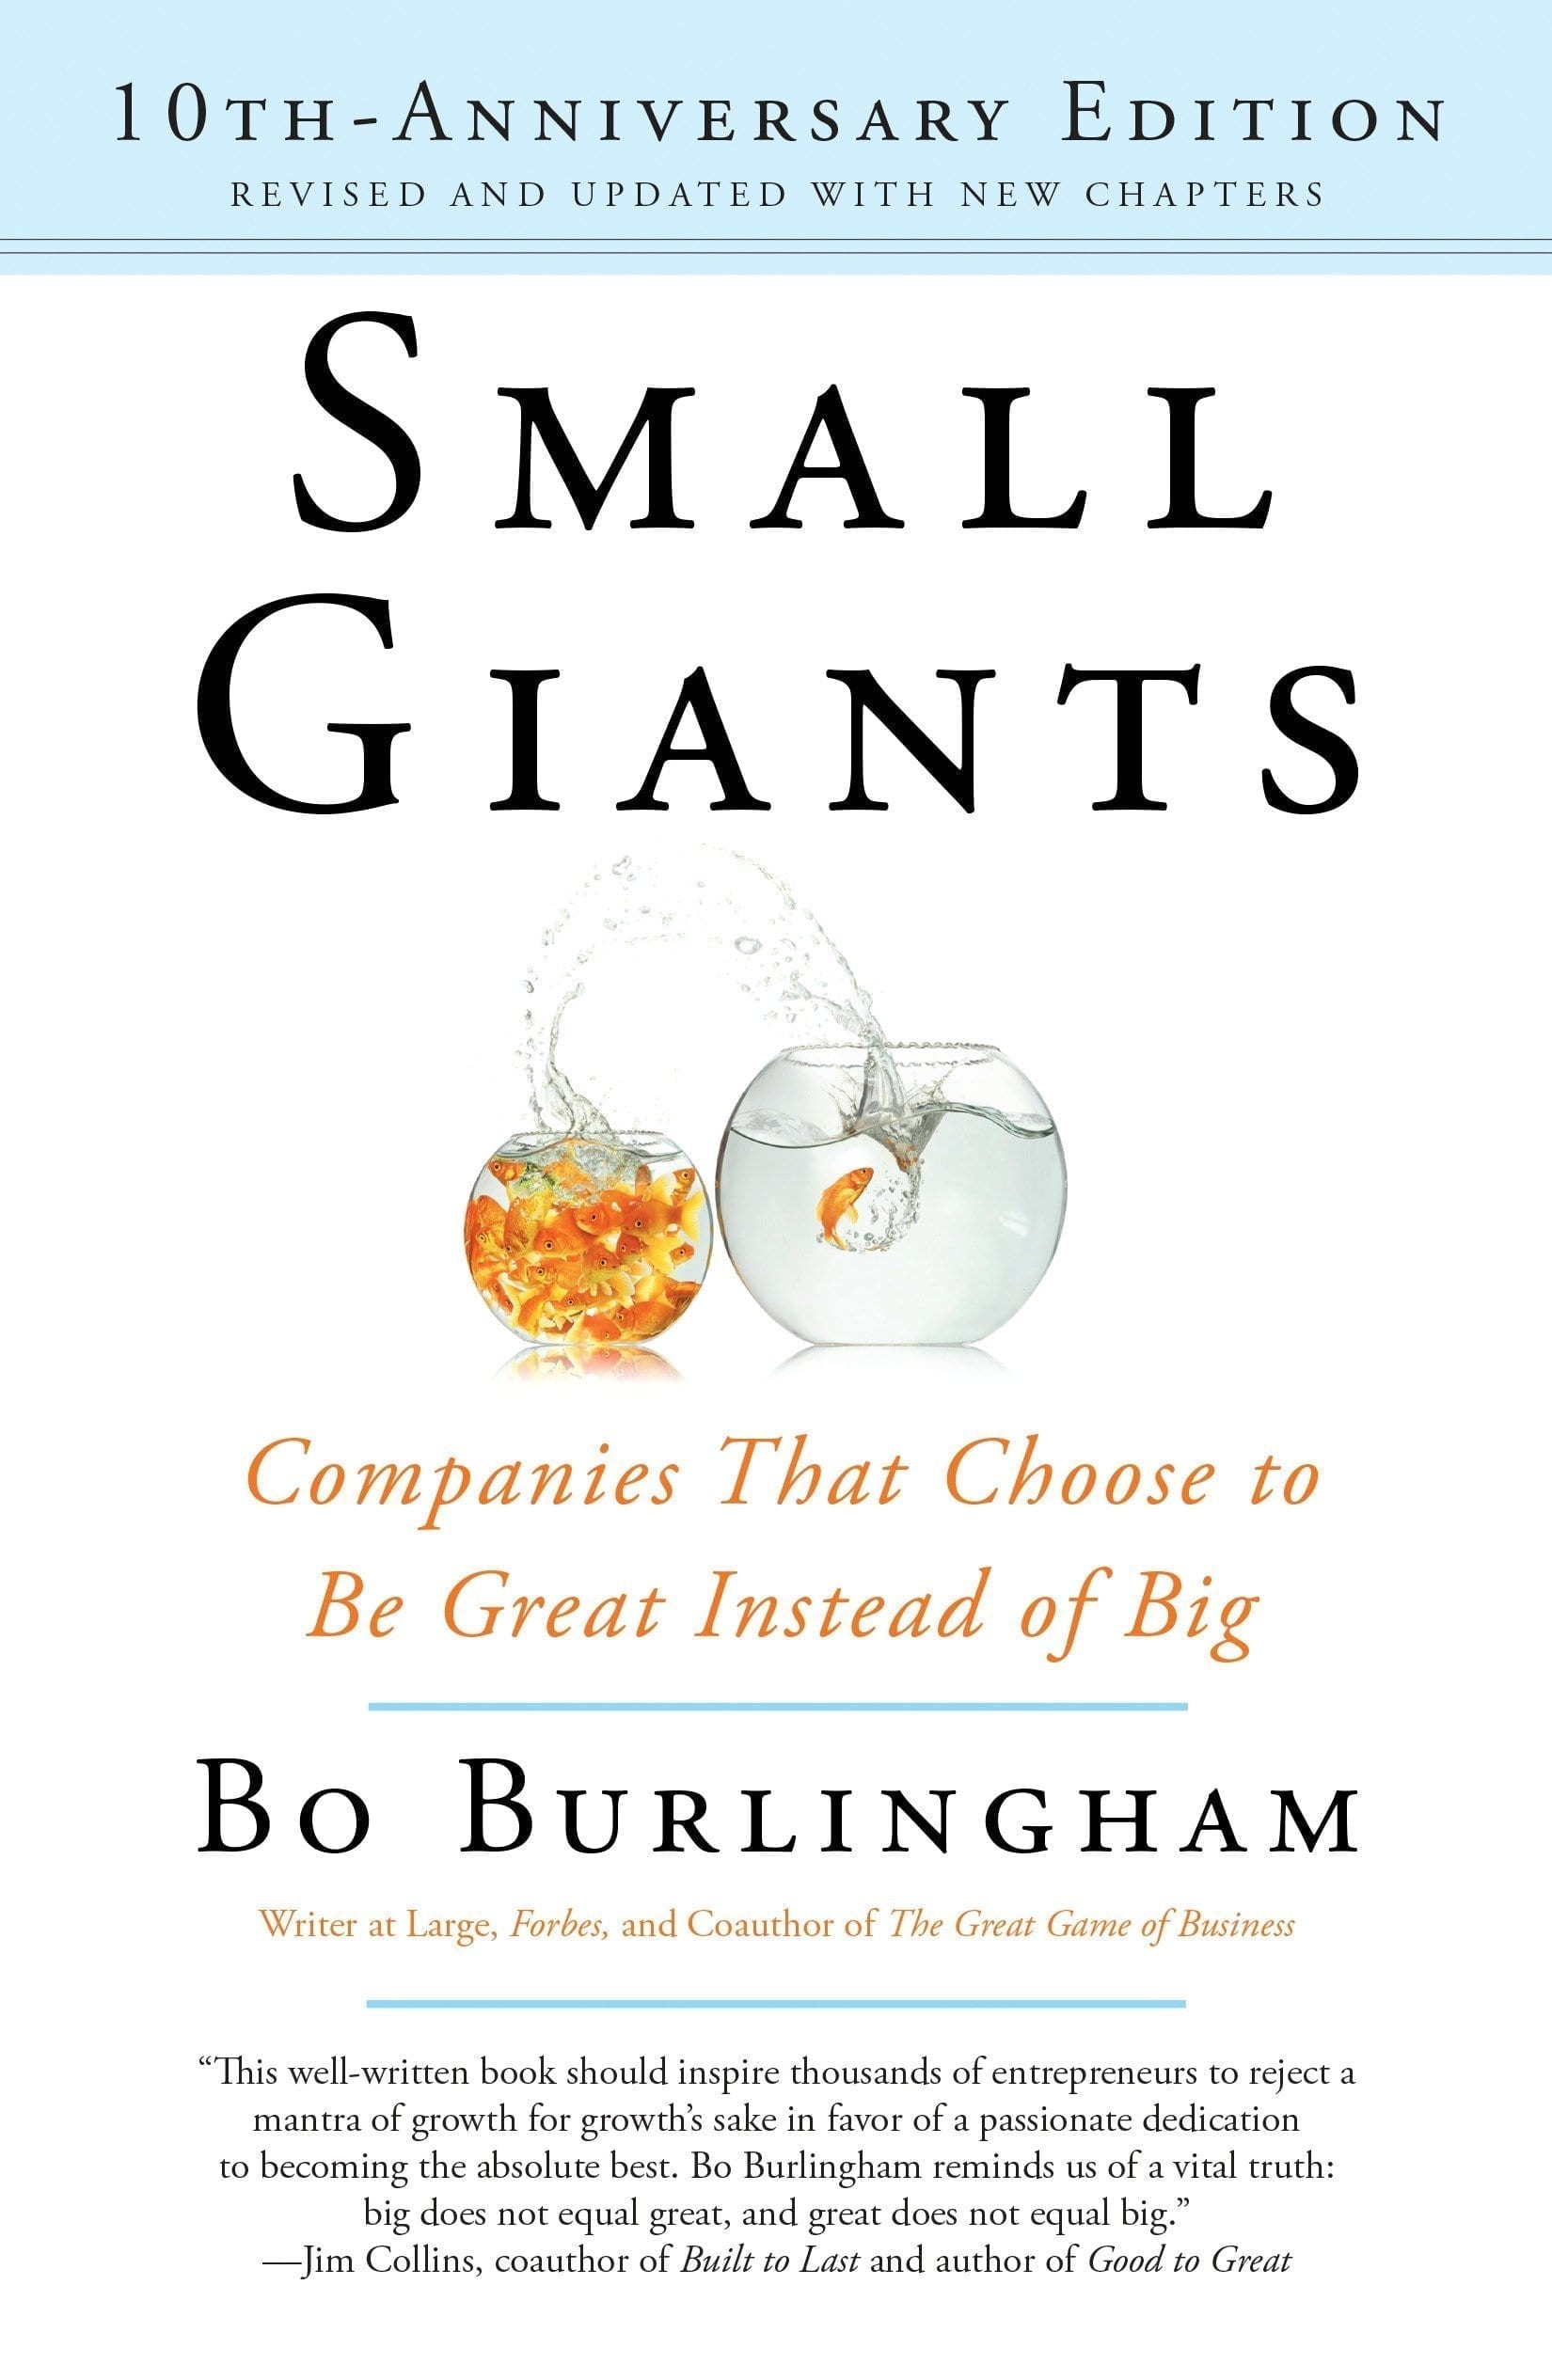 Giants by Bob Burlingham